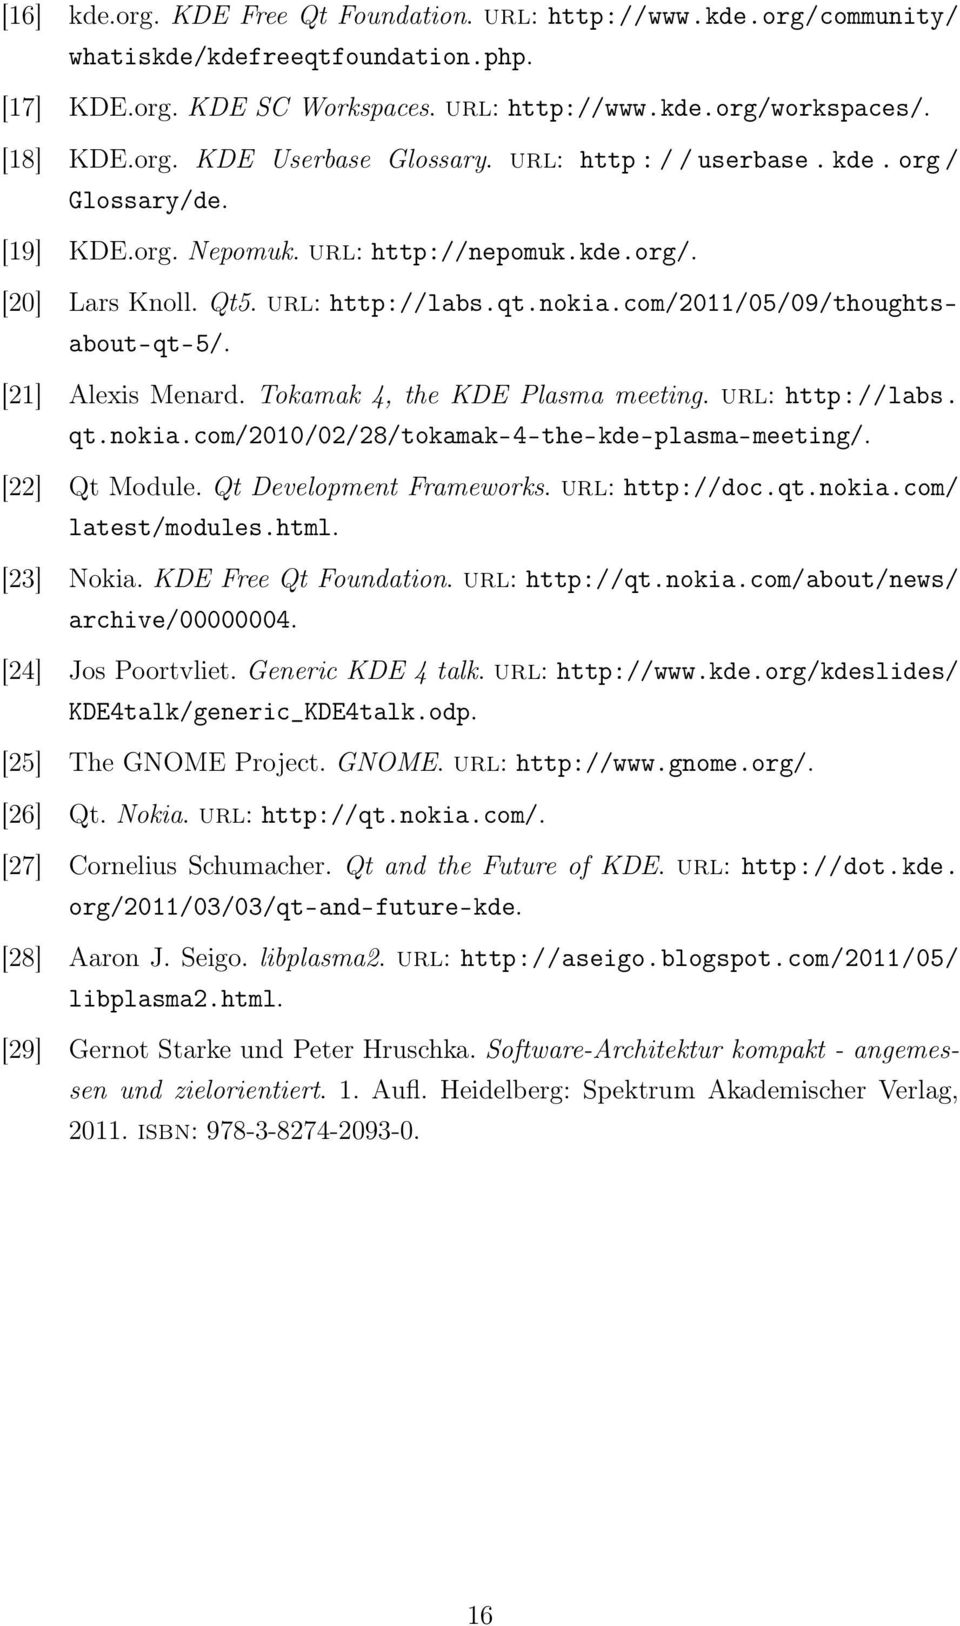 [21] Alexis Menard. Tokamak 4, the KDE Plasma meeting. url: http://labs. qt.nokia.com/2010/02/28/tokamak-4-the-kde-plasma-meeting/. [22] Qt Module. Qt Development Frameworks. url: http://doc.qt.nokia.com/ latest/modules.